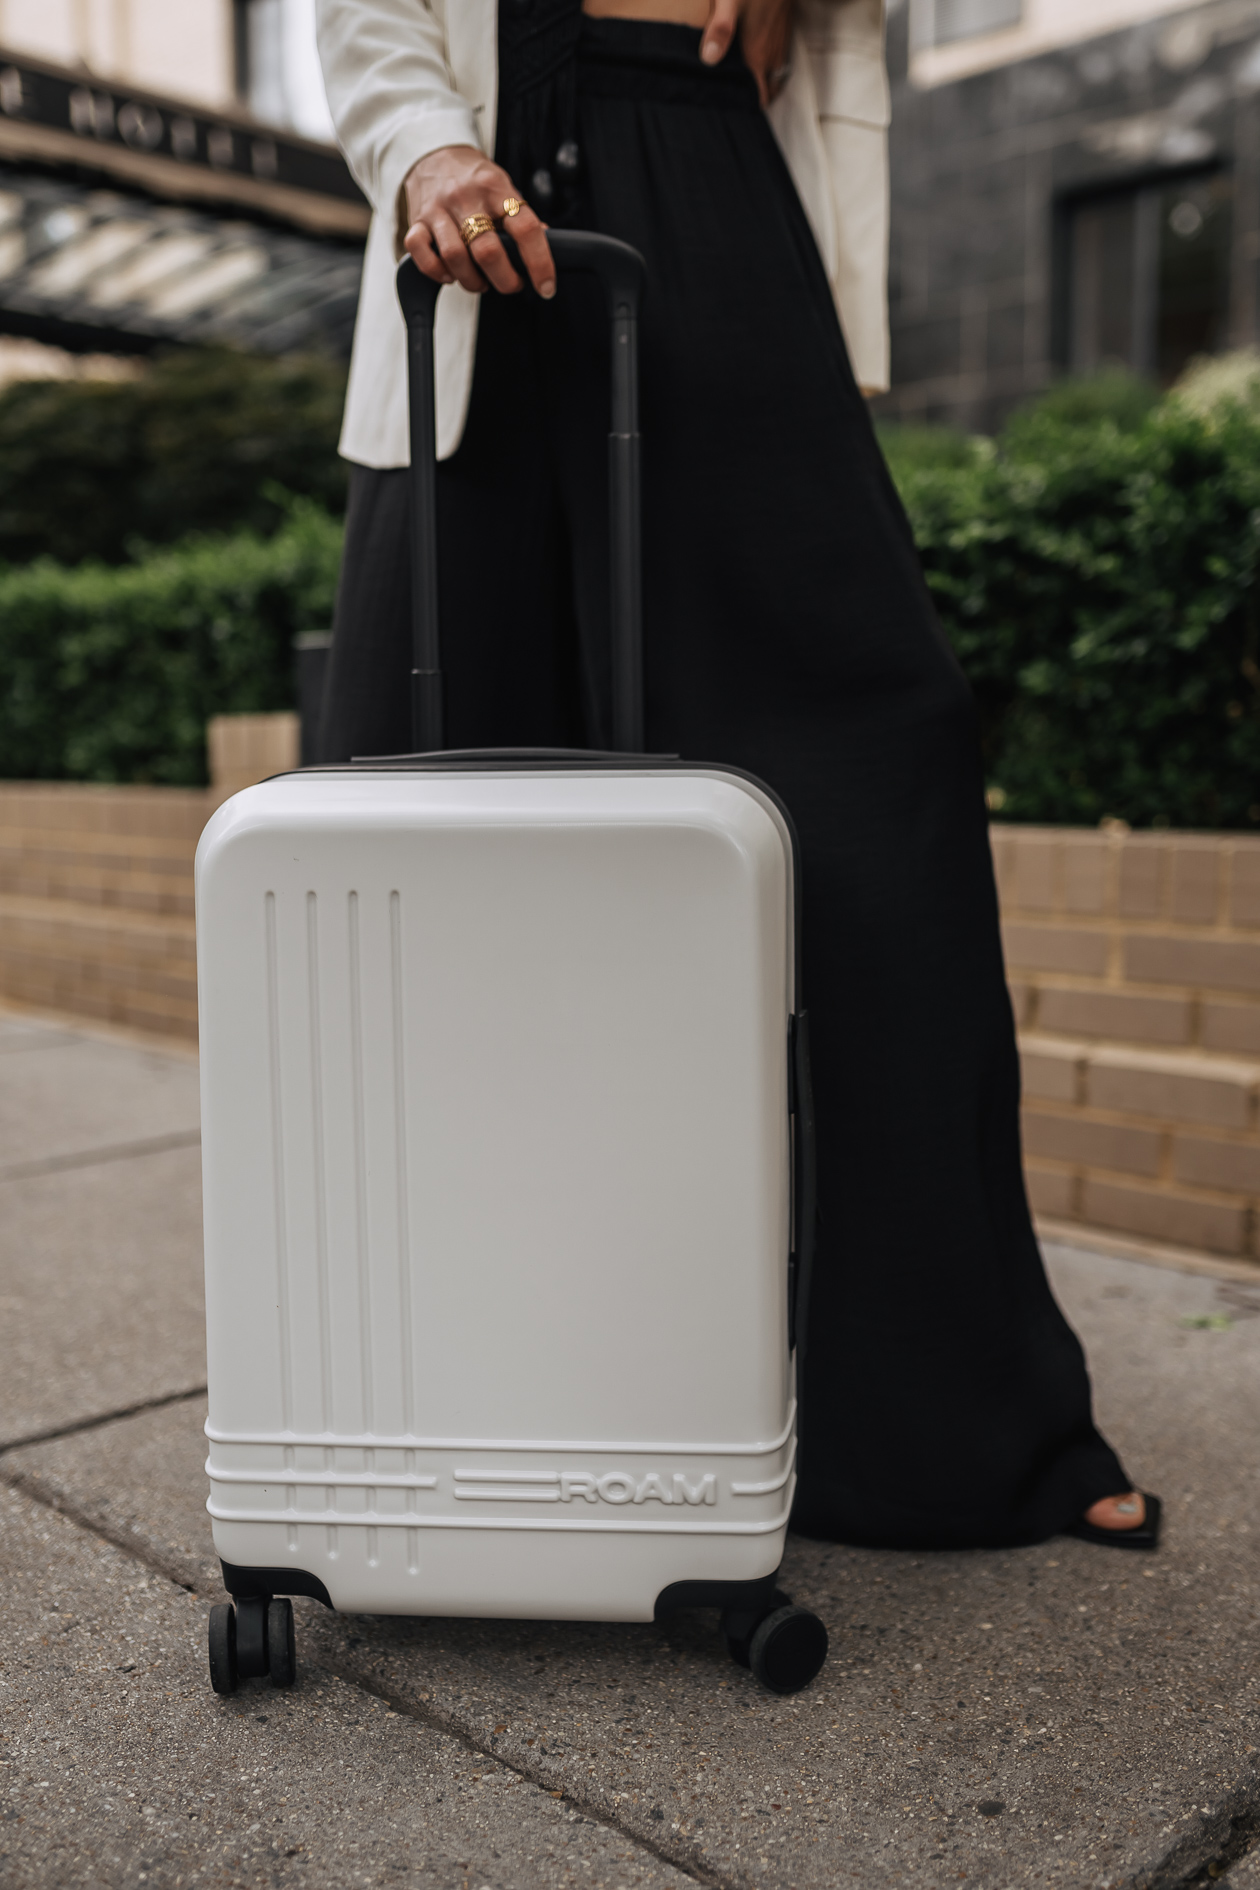 ROAM customizable luggage